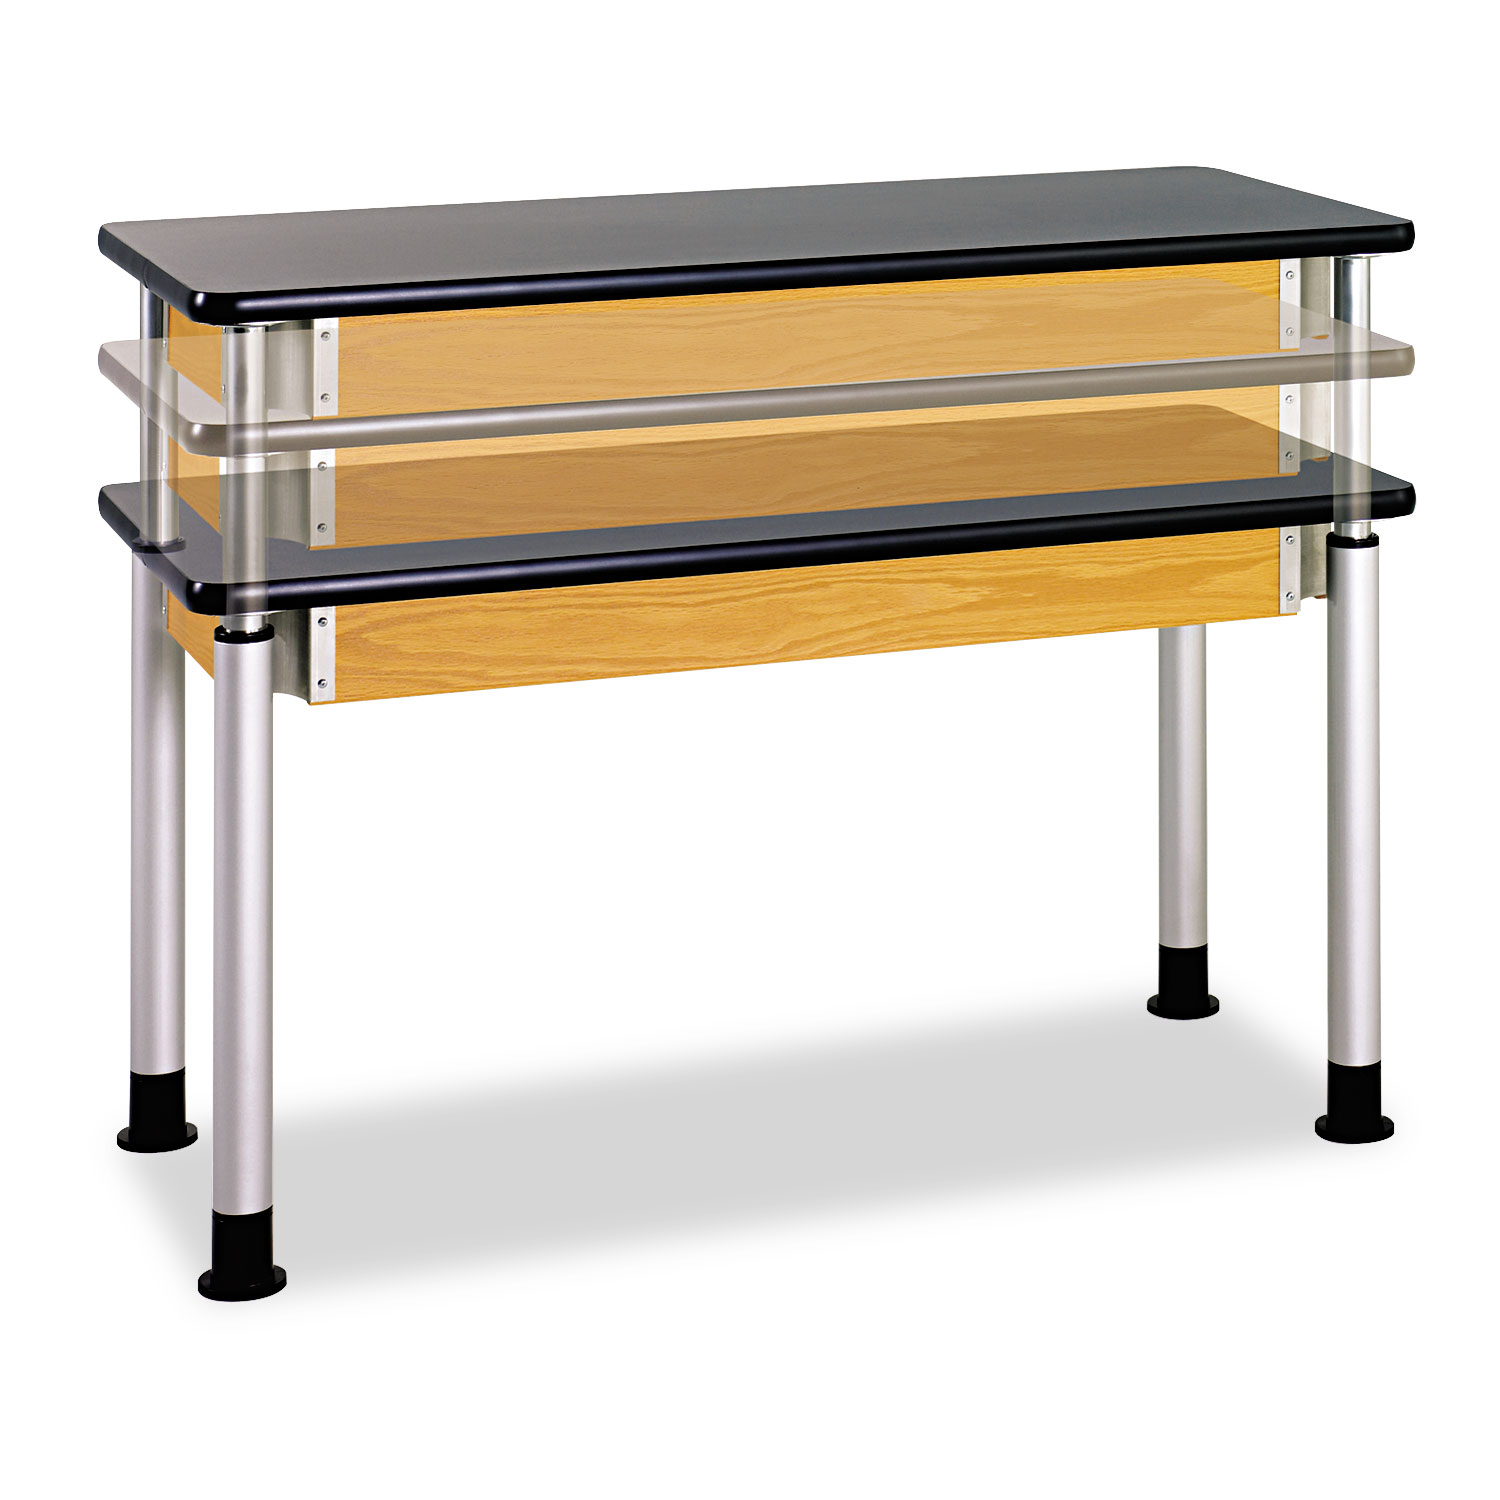 Adjustable-Height Table, Rectangular, 54w x 24d x 42h, Black